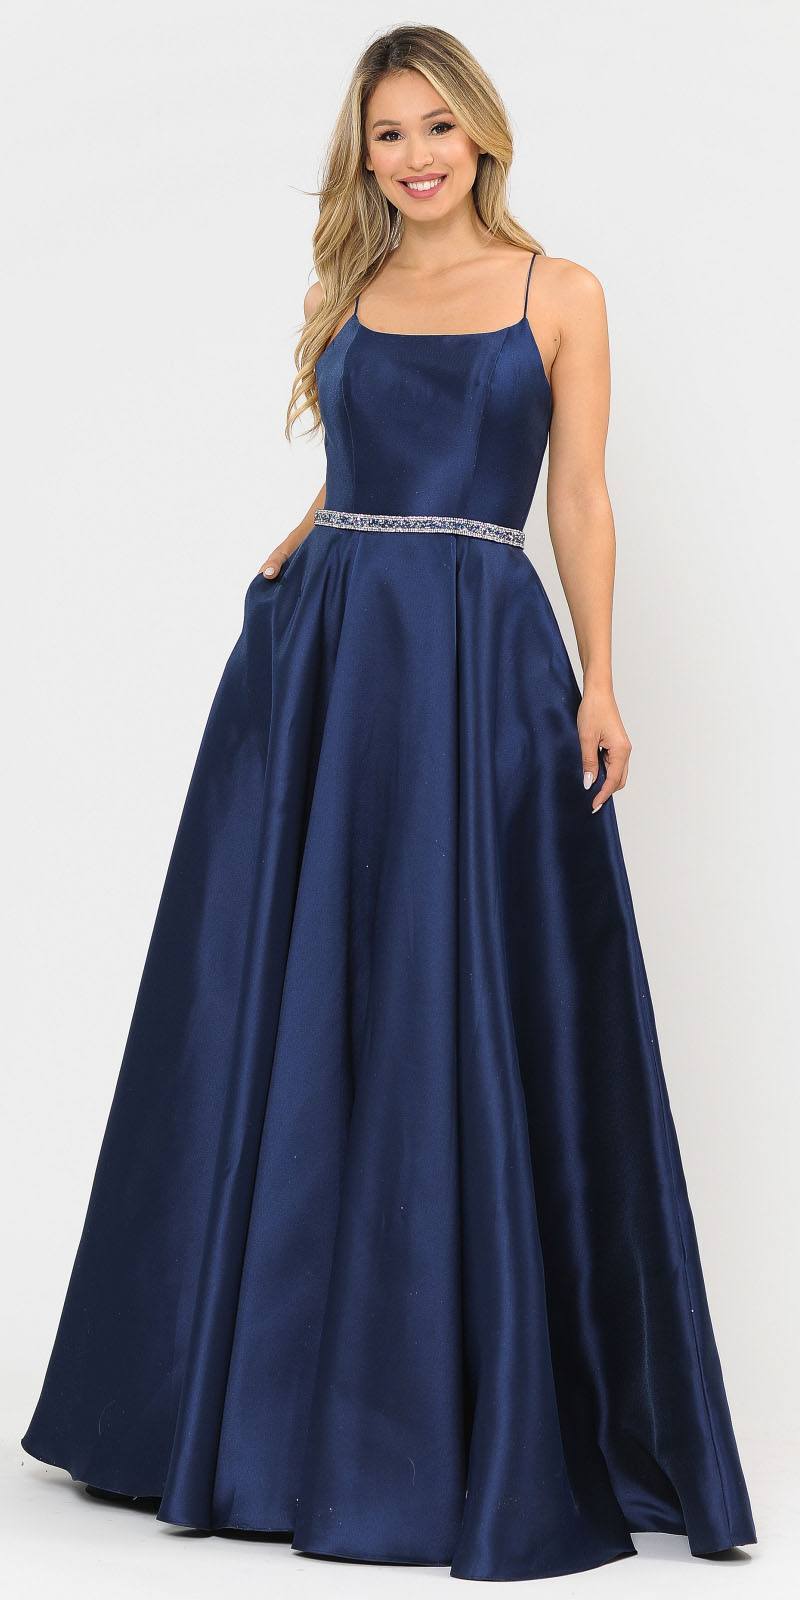 silky navy blue dress